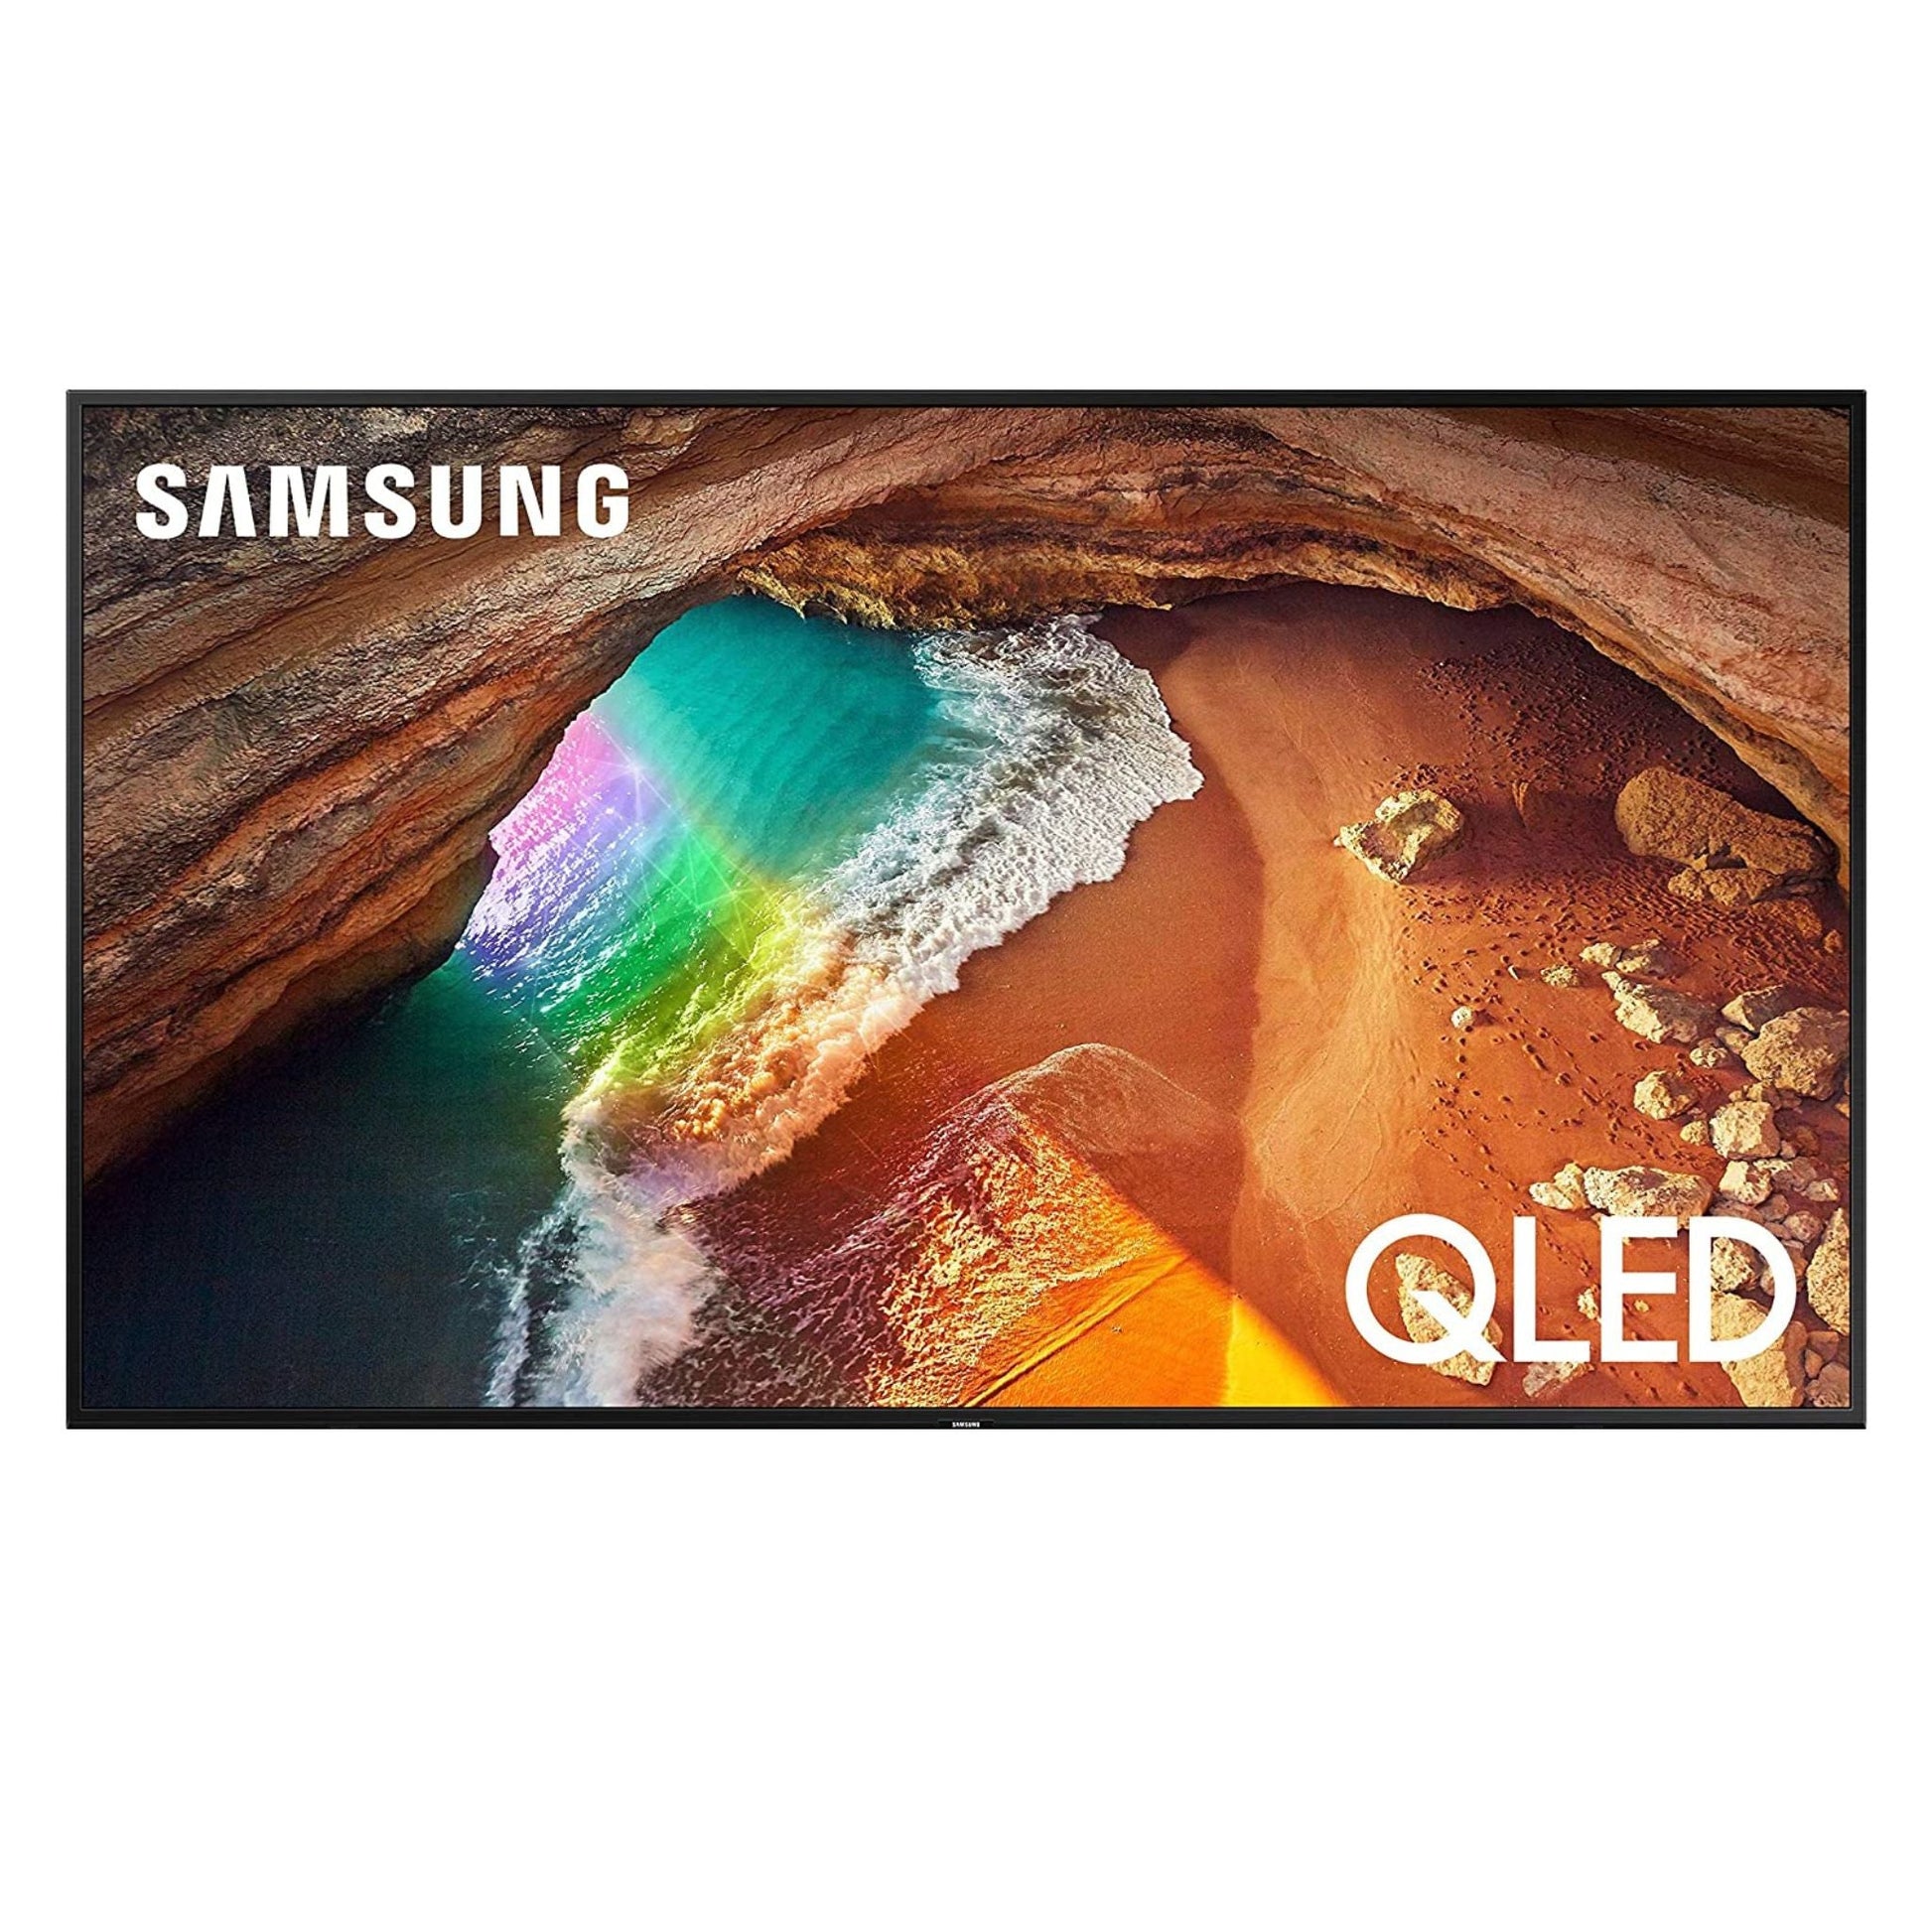 Samsung 55 inch Smart QLED TV, 55Q70R